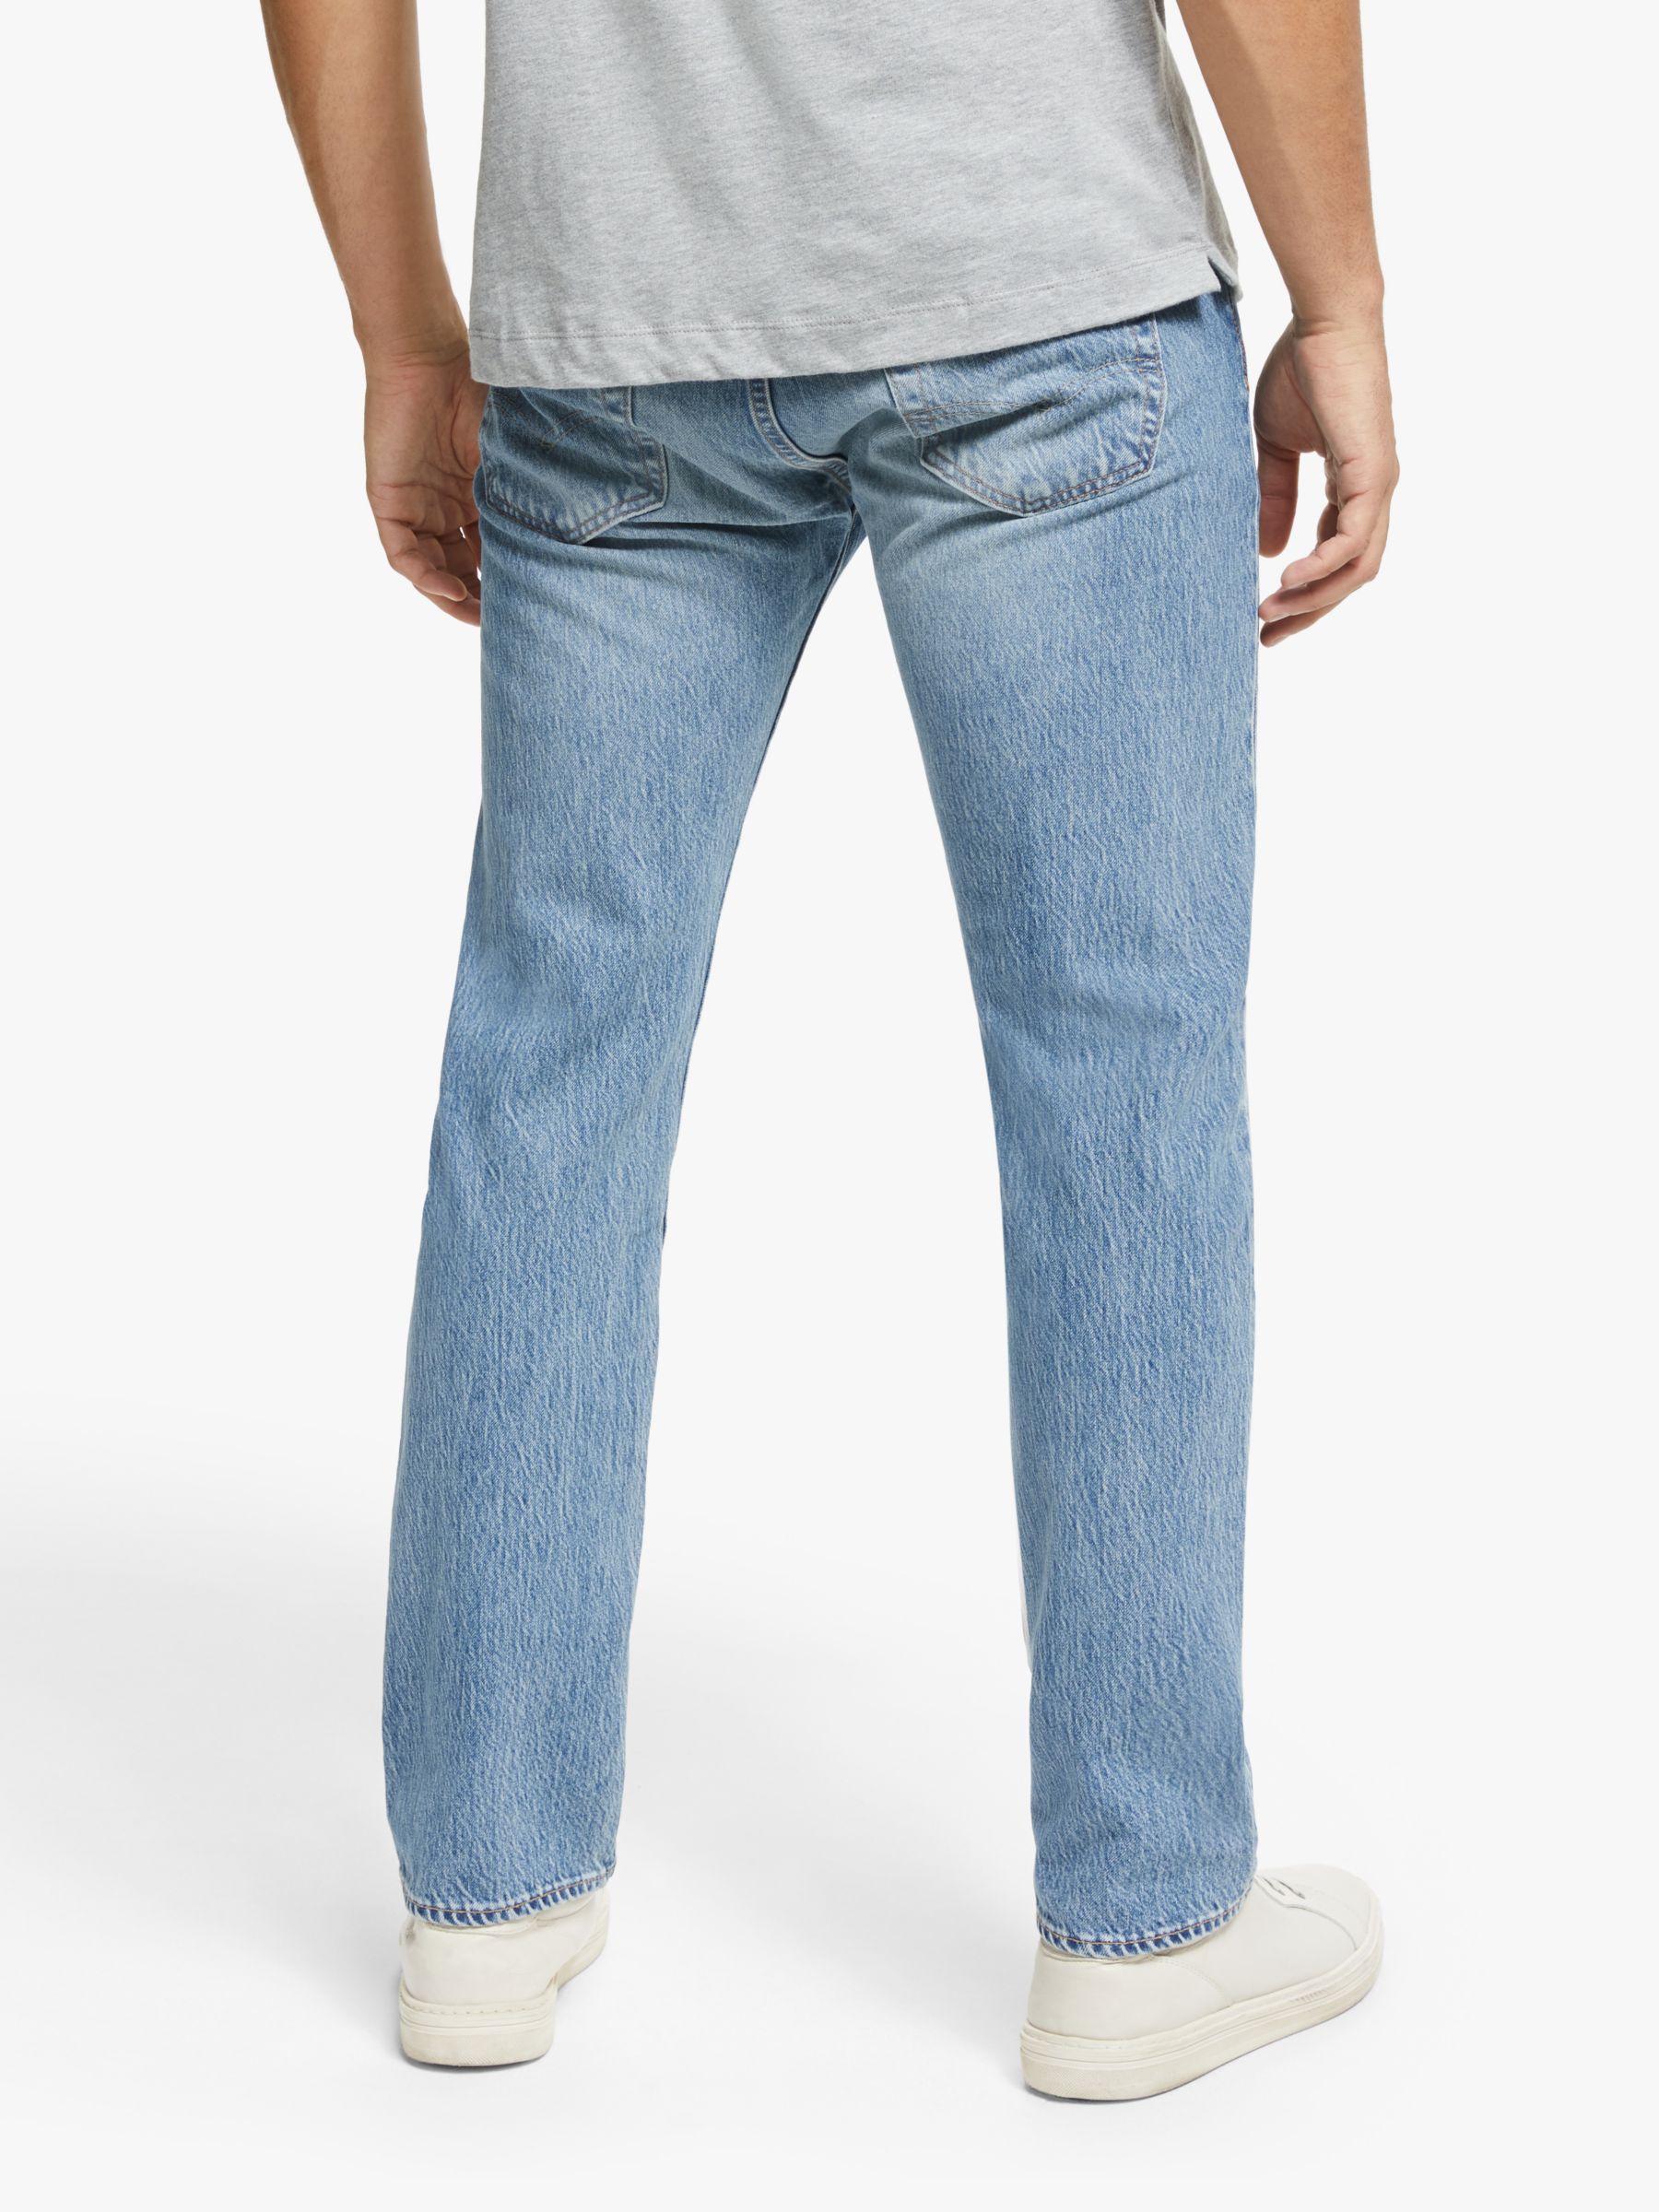 Levi's 501 Original Fit Slim Jeans, Pipe Subtle